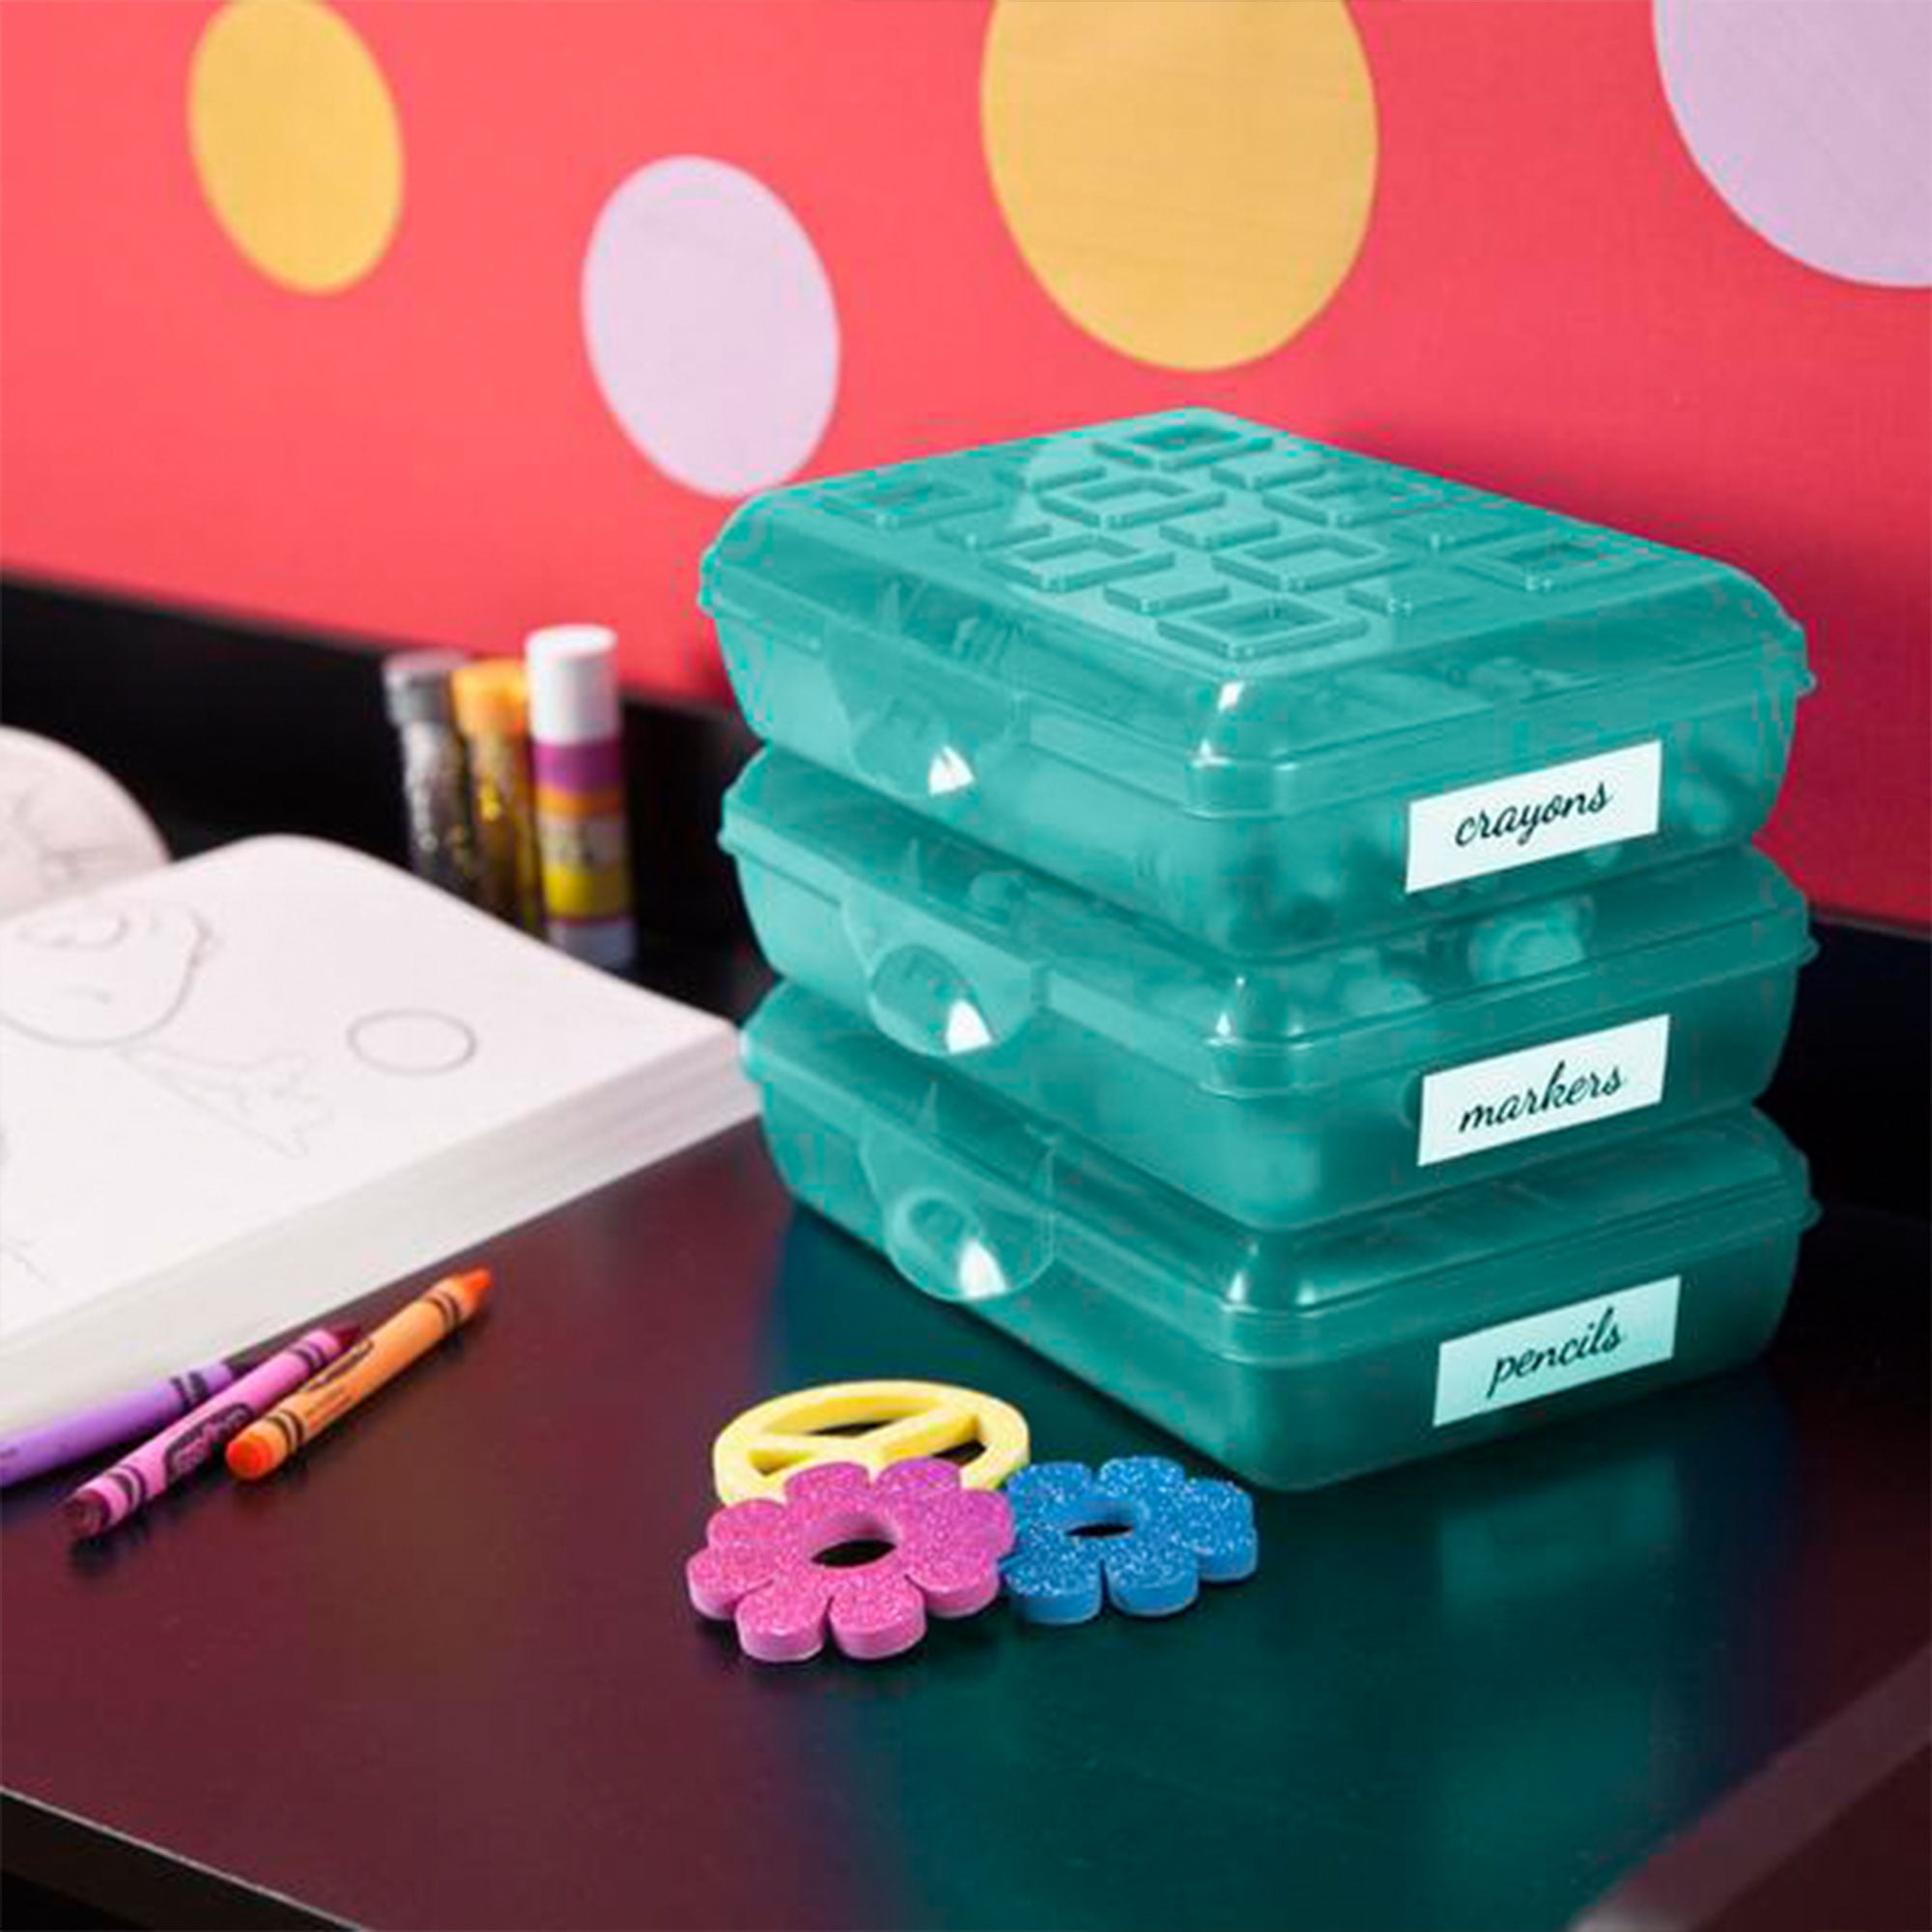 Sterilite School Supply Pencil Box - Blue : Target